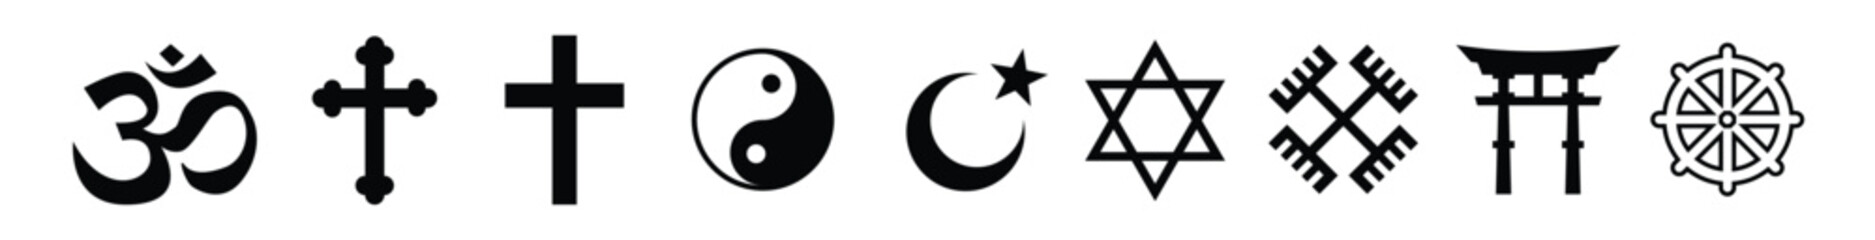 religion symbol set.  Hindu, Buddhism, Christian, Islam, vector set stock illustration